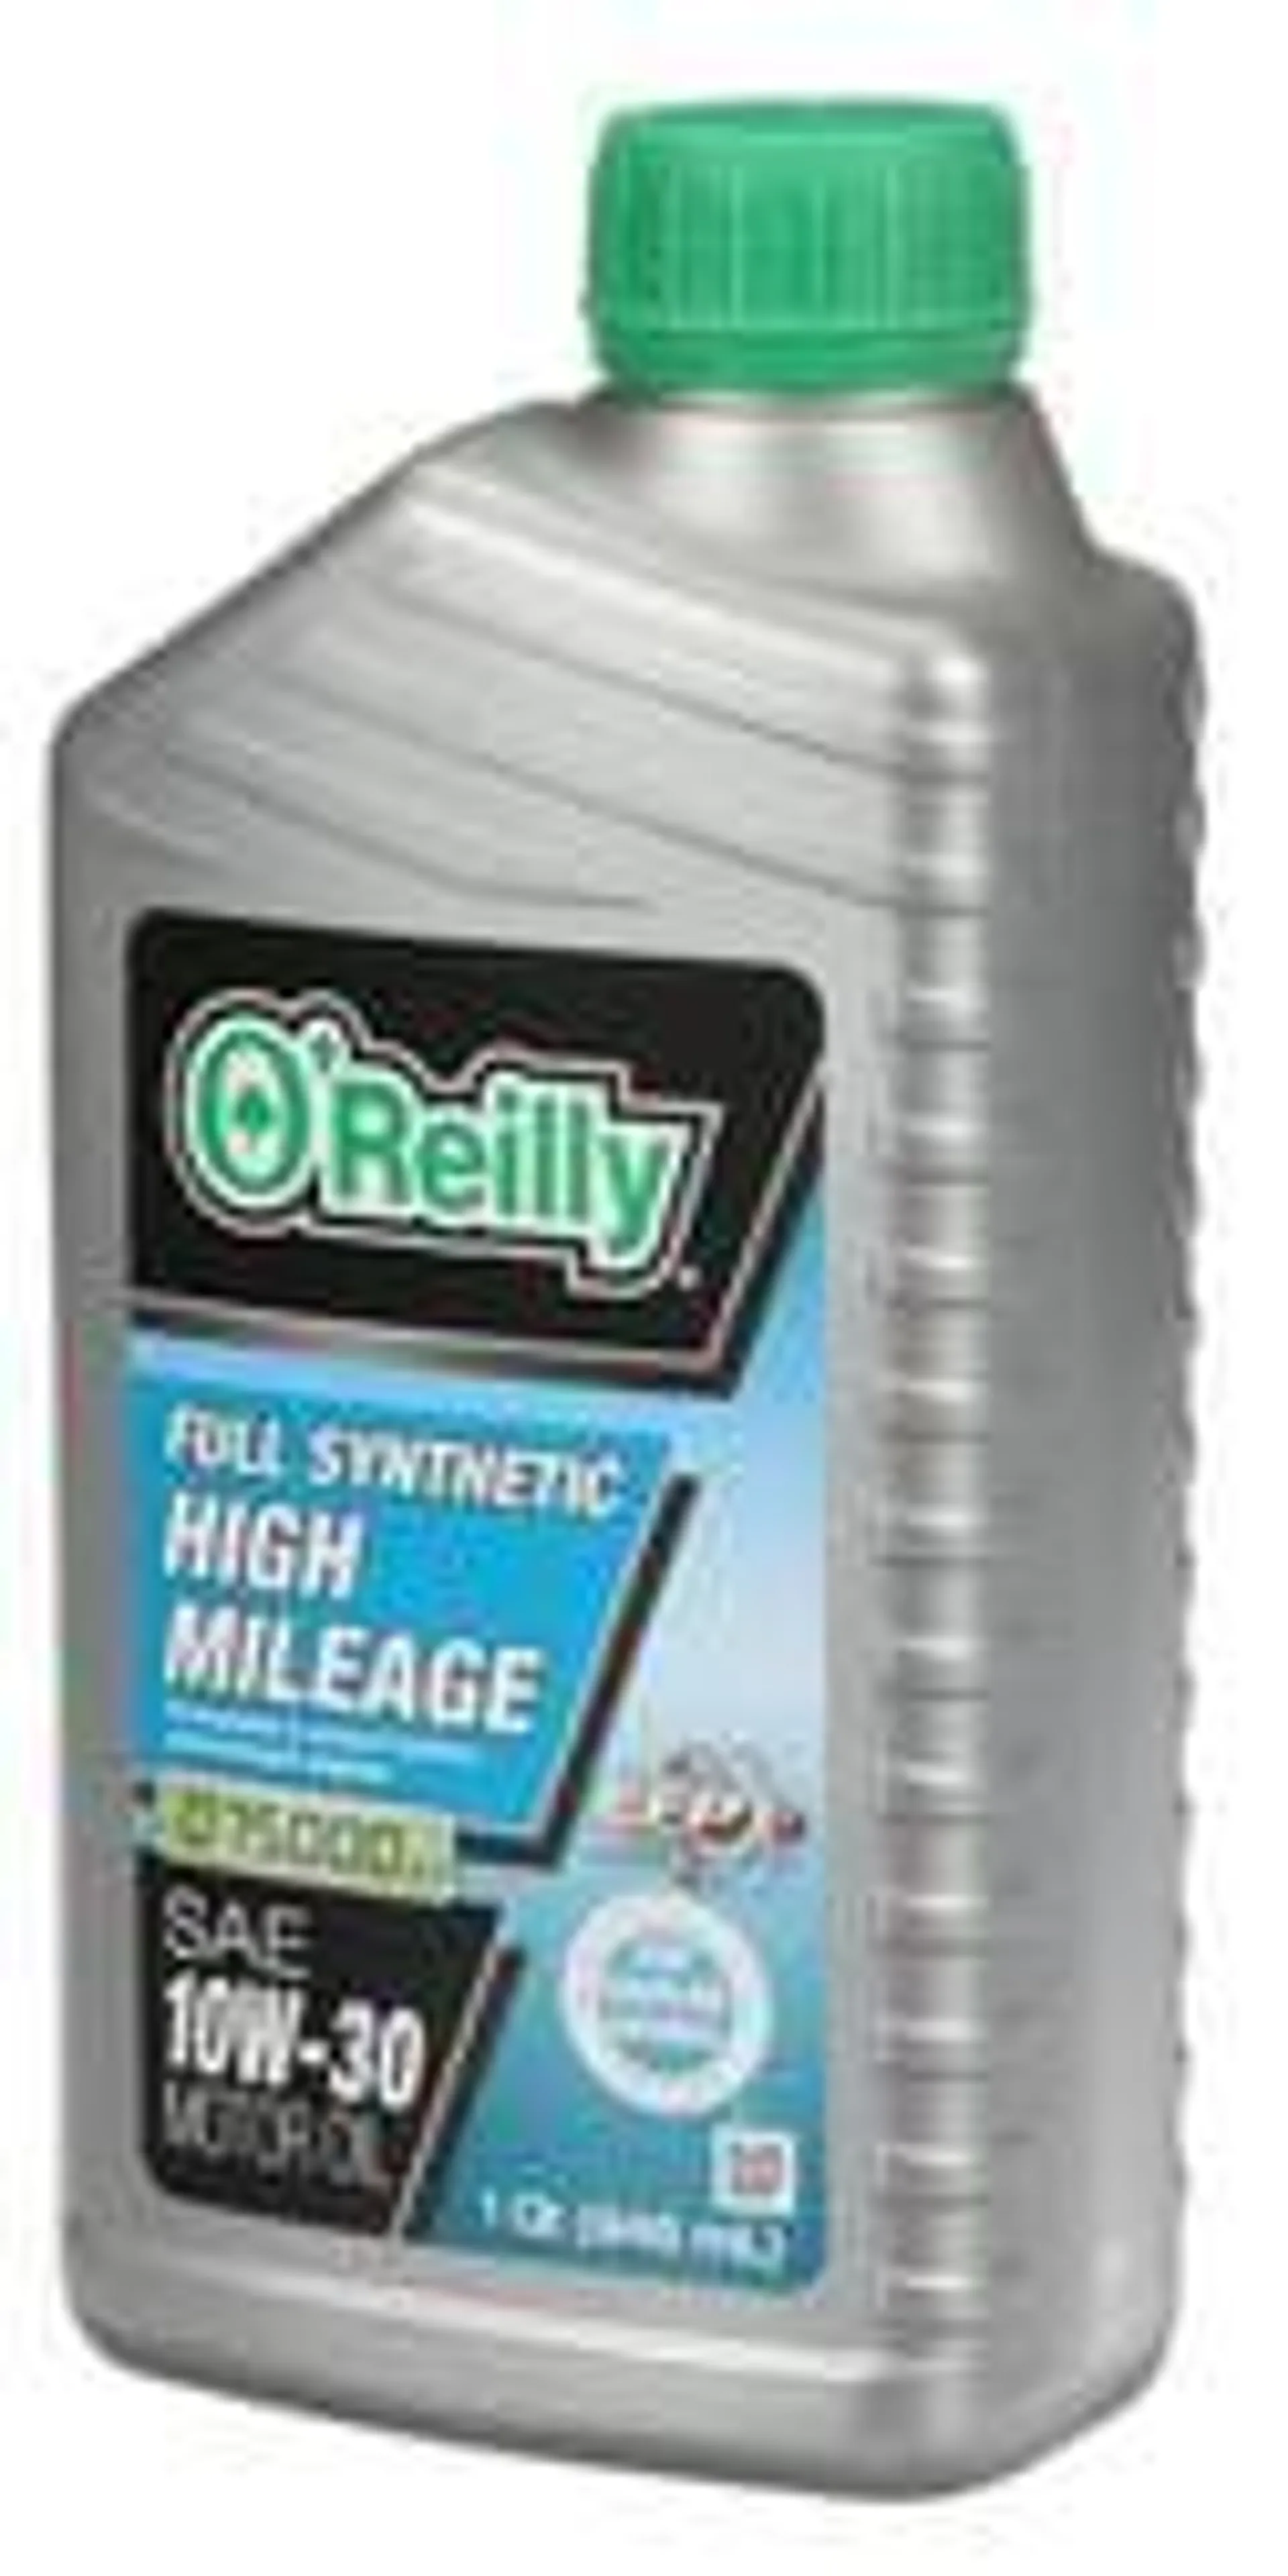 O'Reilly Full Synthetic Motor Oil 10W-30 1 Quart - HI-SYN10-30